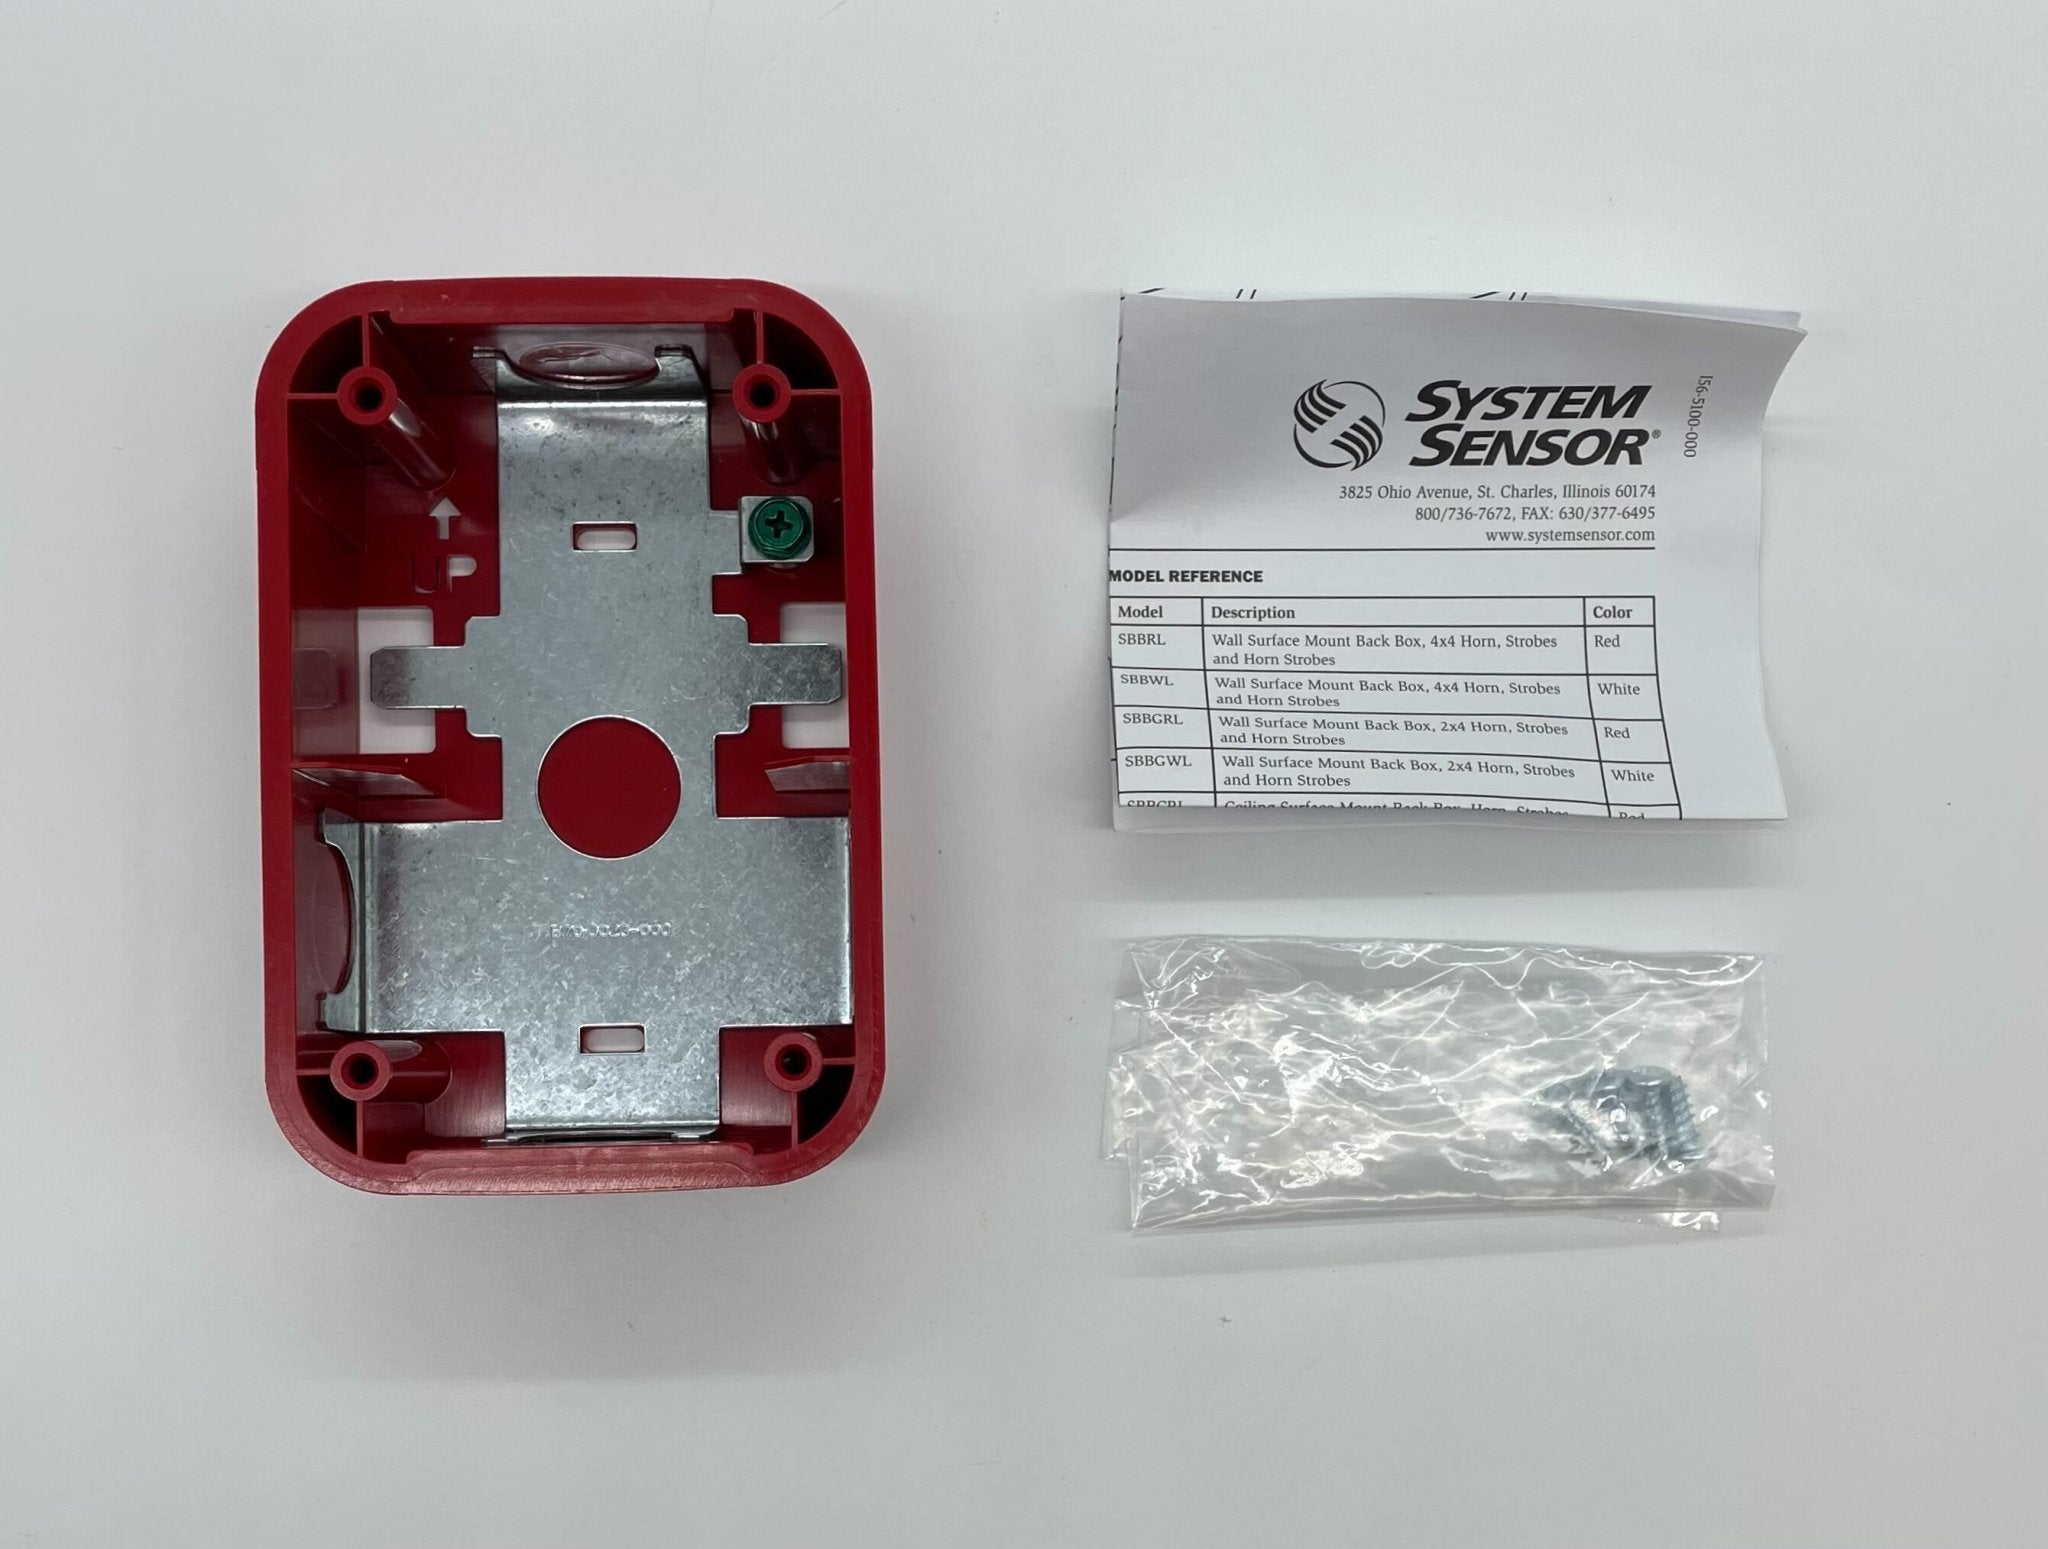 System Sensor SBBGRL - The Fire Alarm Supplier